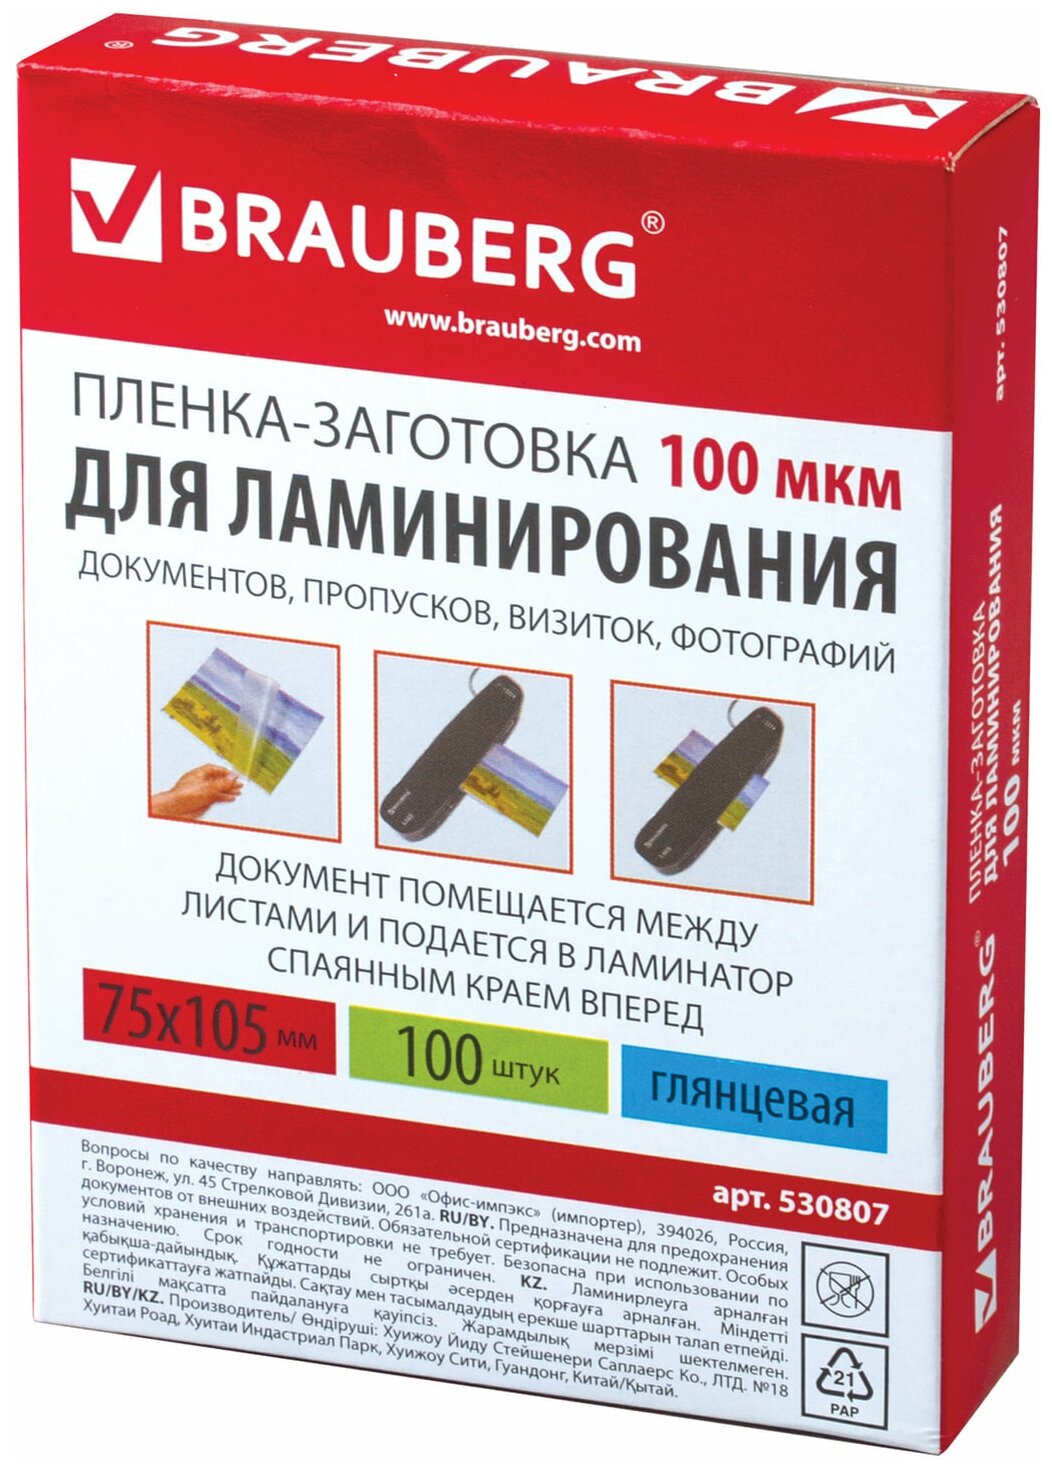 Пленки-заготовки для ламинирования малого формата (75х105) комплект 100  100 мкм BRAUBERG 530807